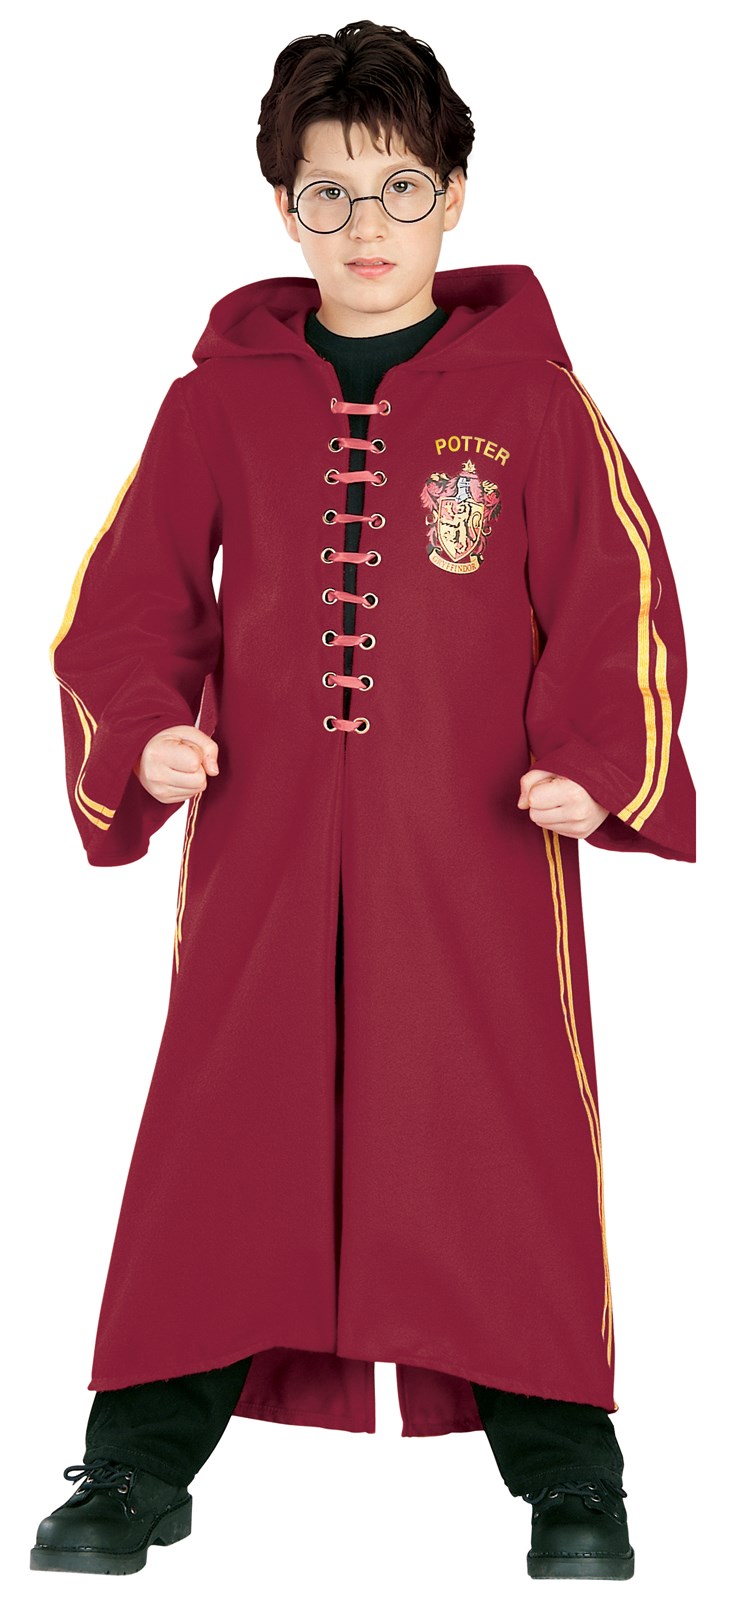 Harry Potter Quidditch Robe Super Deluxe - Child